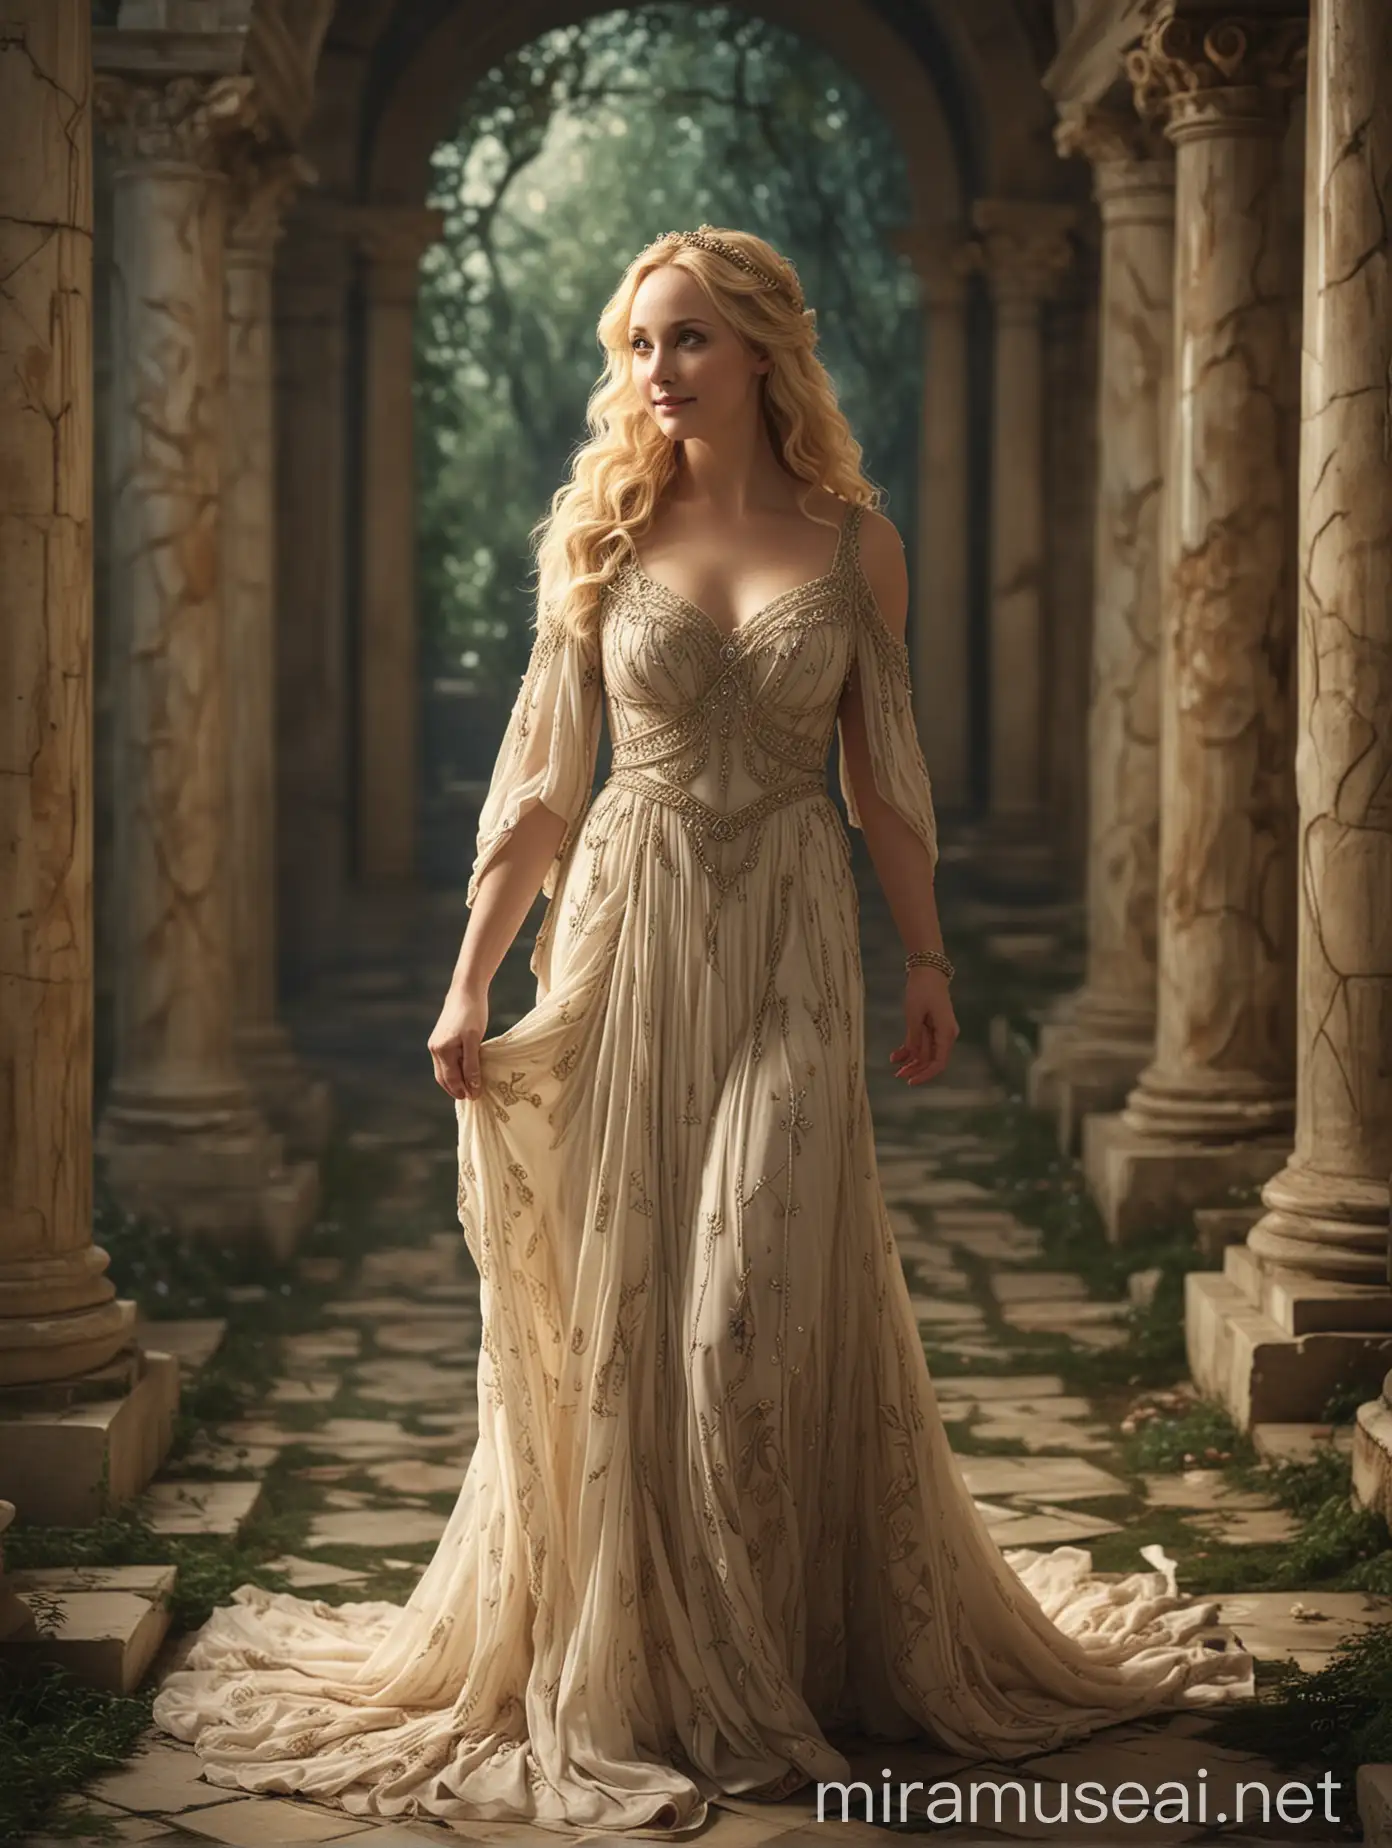 Ariadne in Ethereal Labyrinth Candice Accola as Greek Mythological Figure